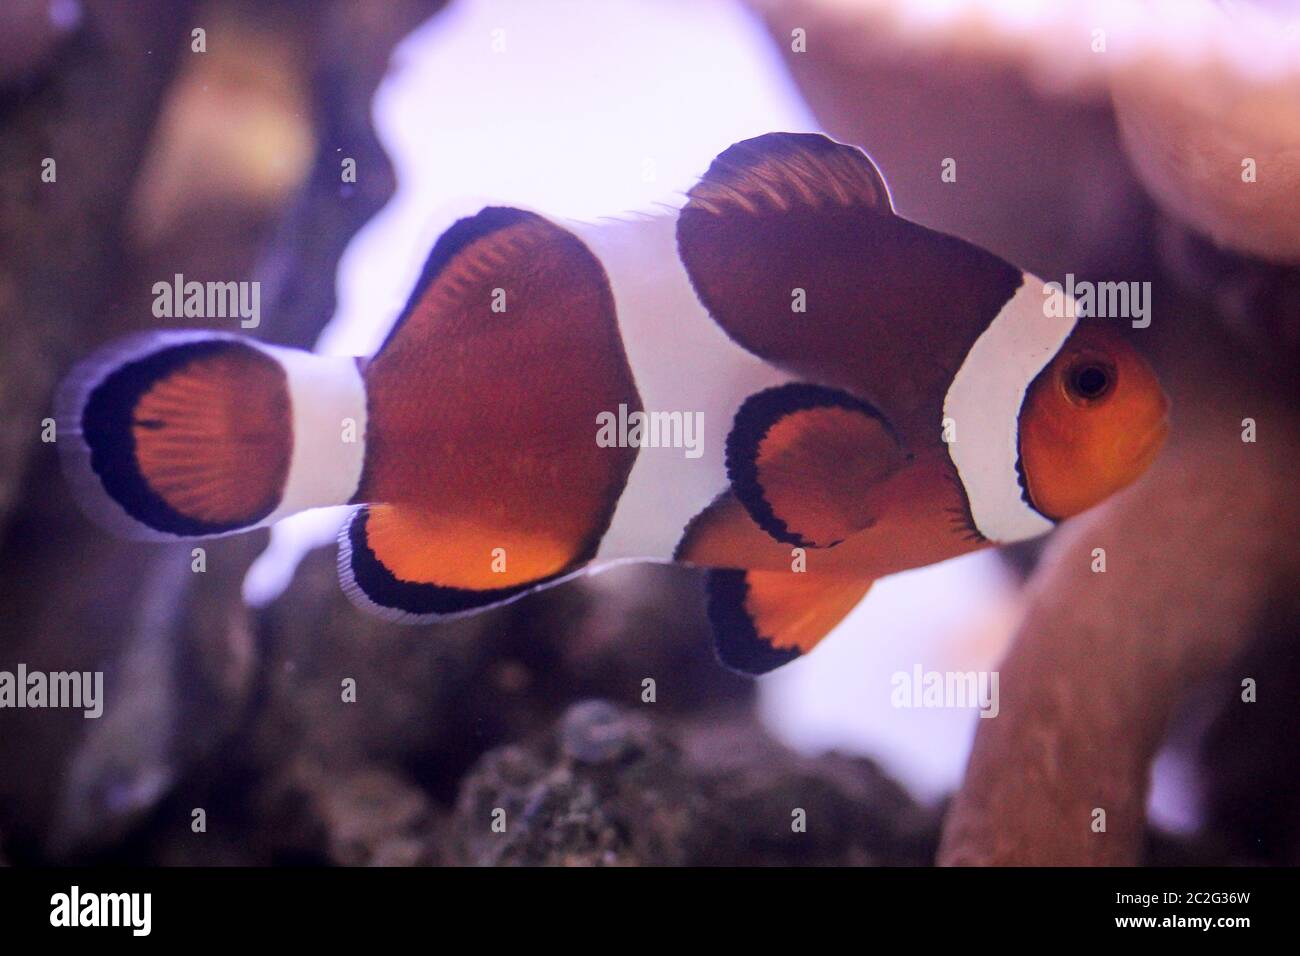 View, portrait of an anemone fish in aquarium Stock Photo